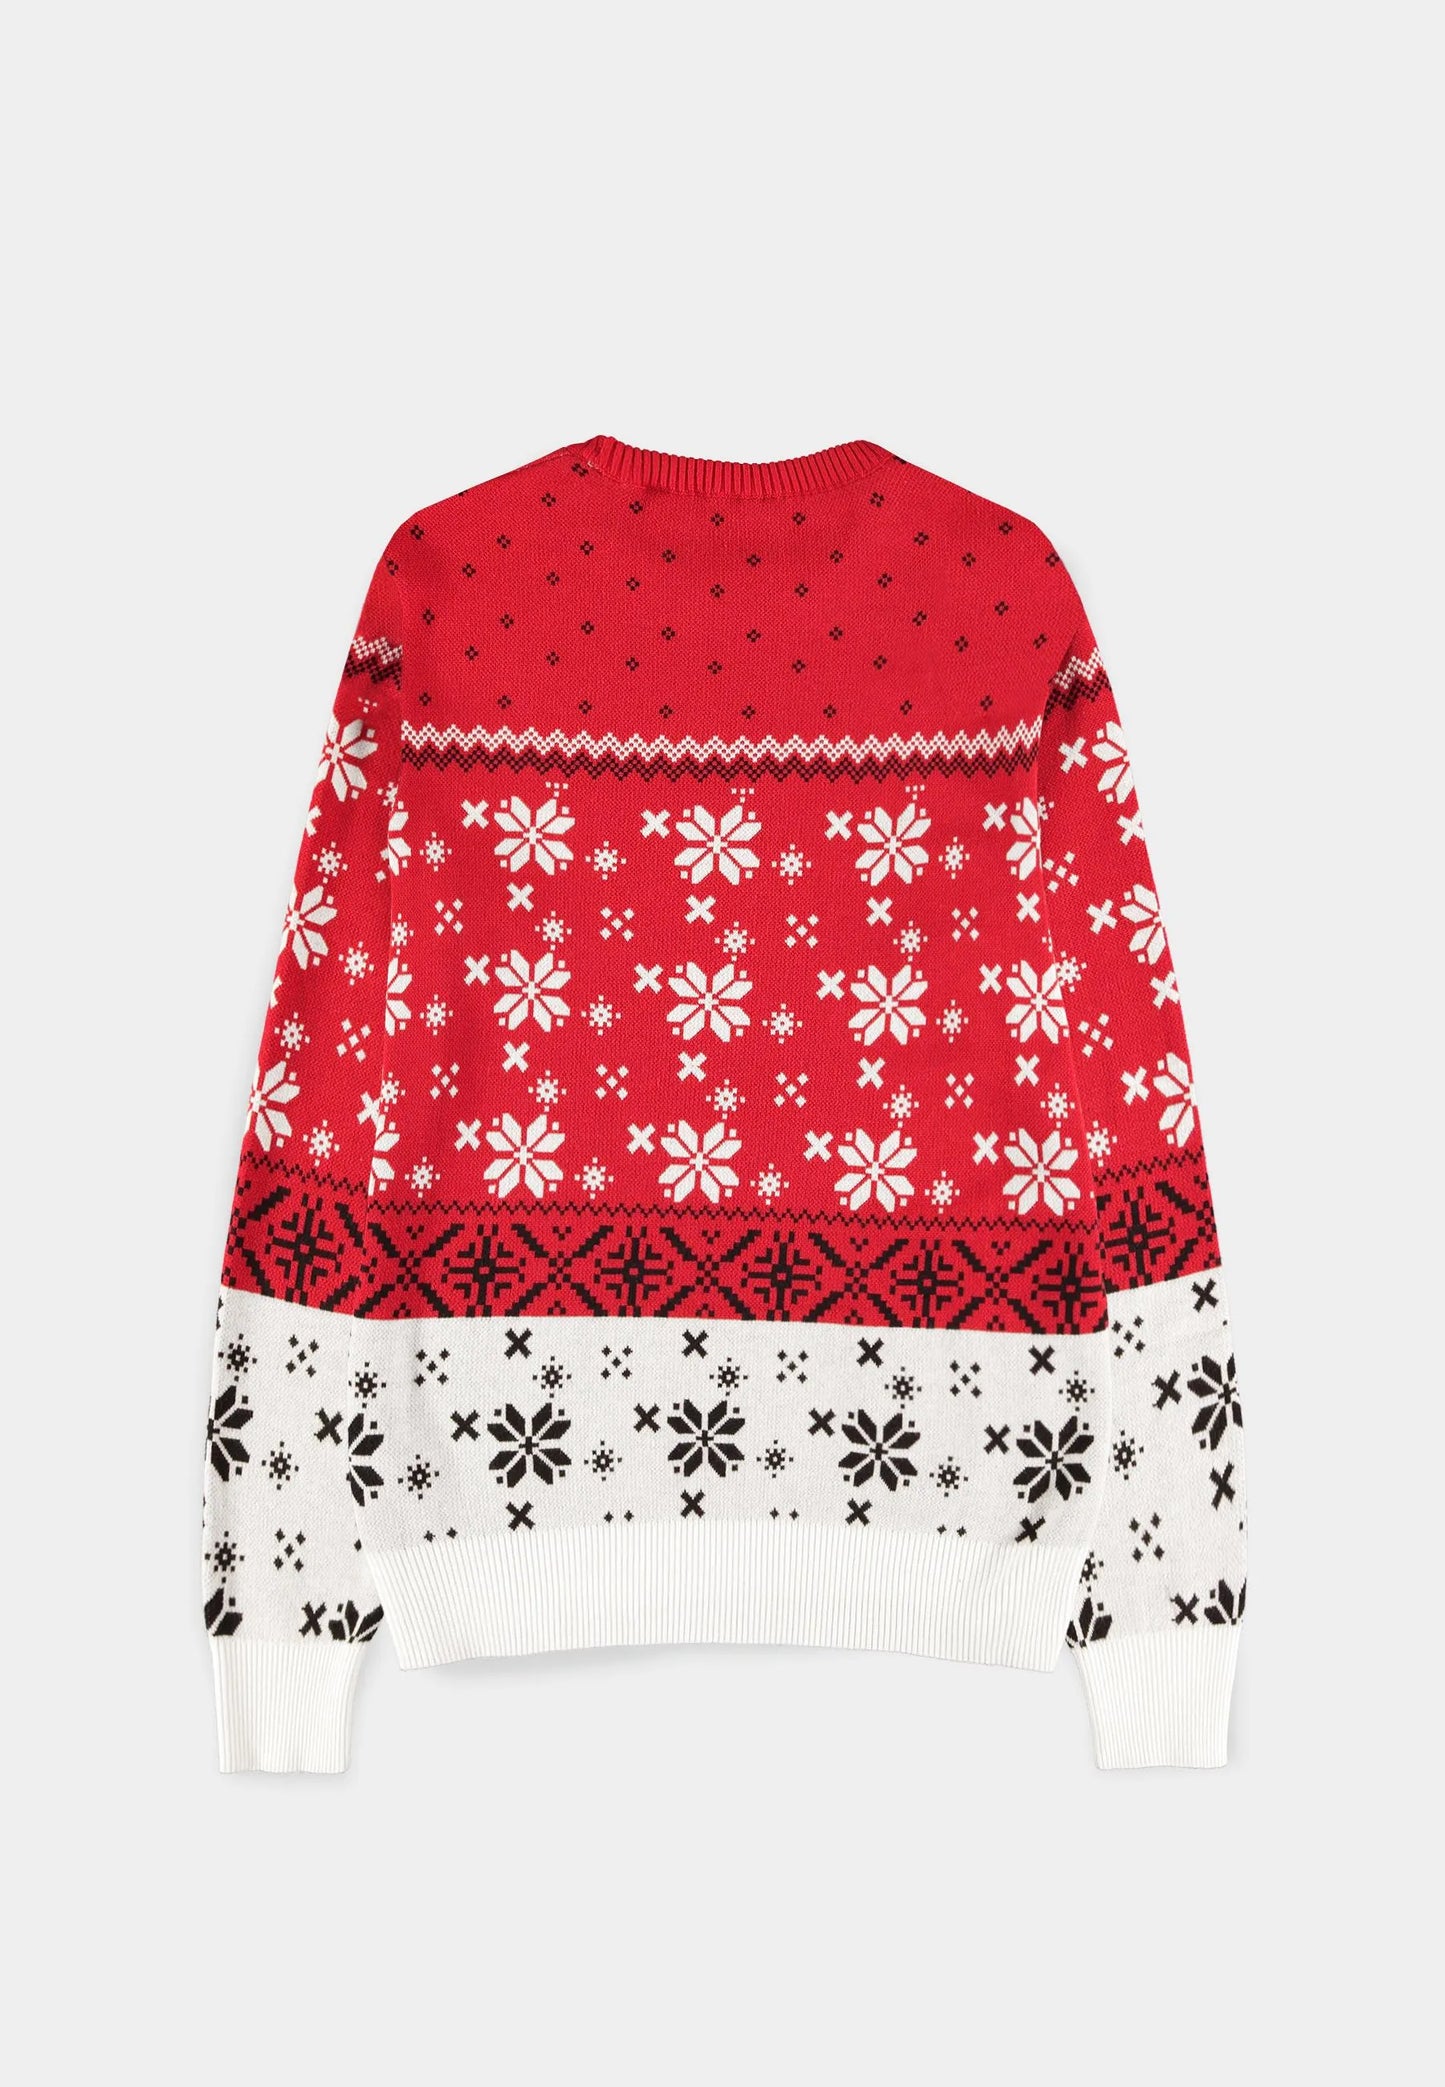 Atari Christmas Sweater 